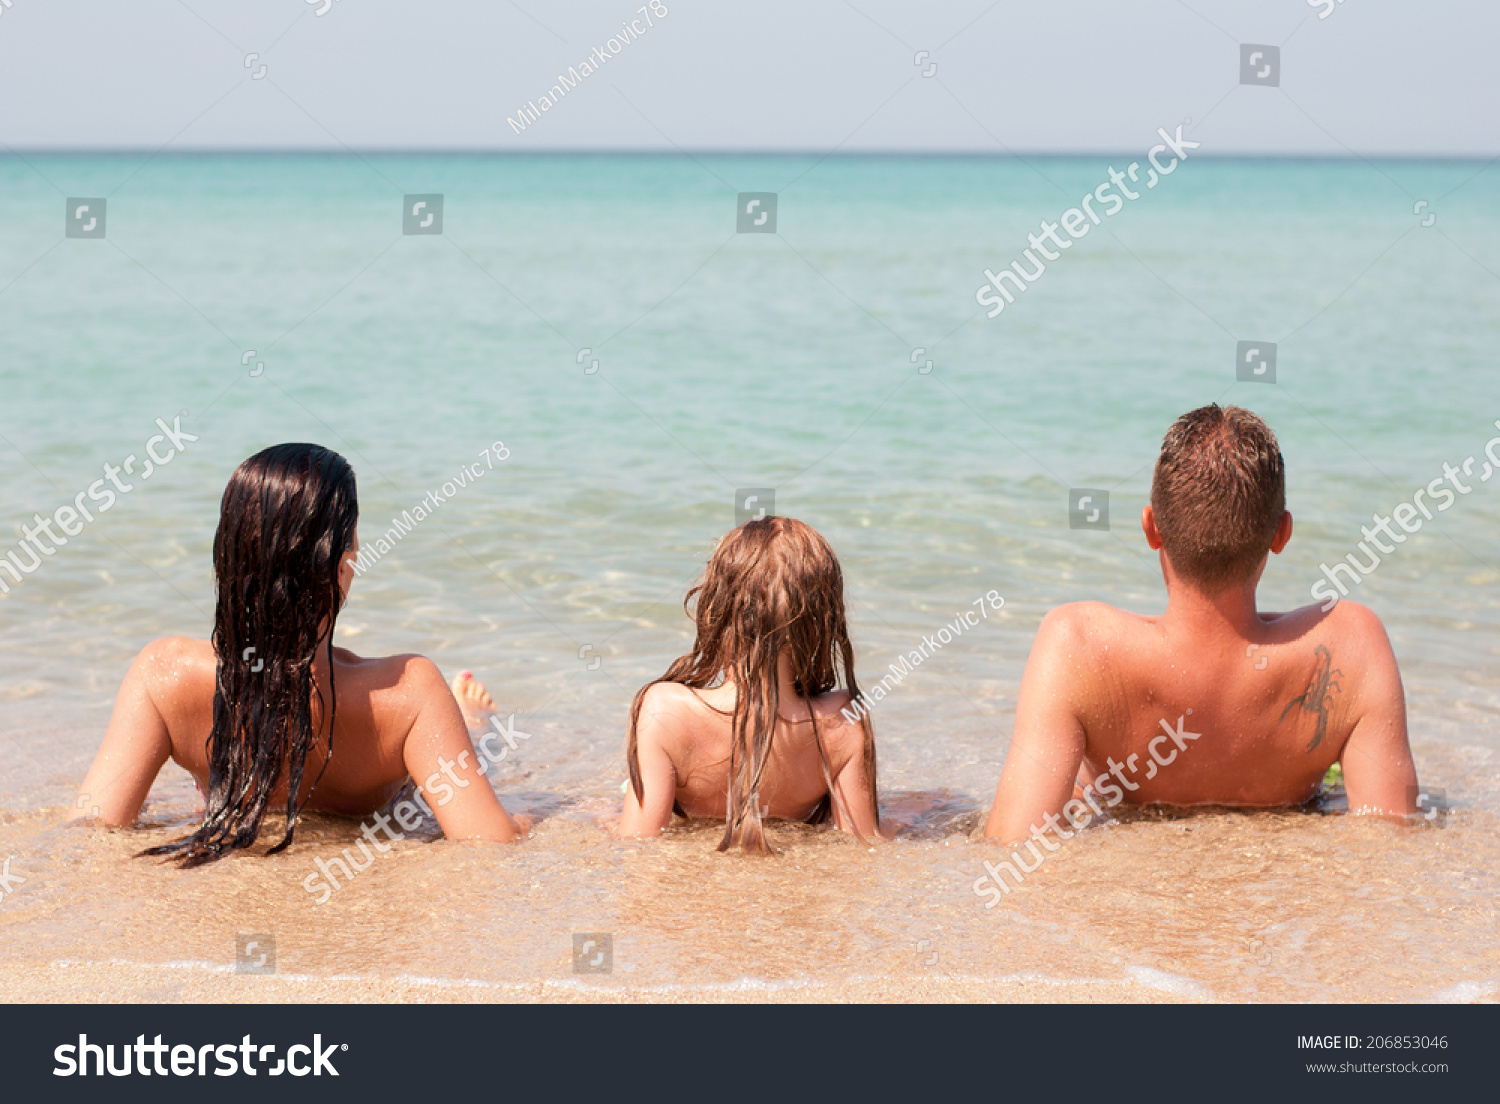 adhora hossain share family nude beach pictures photos